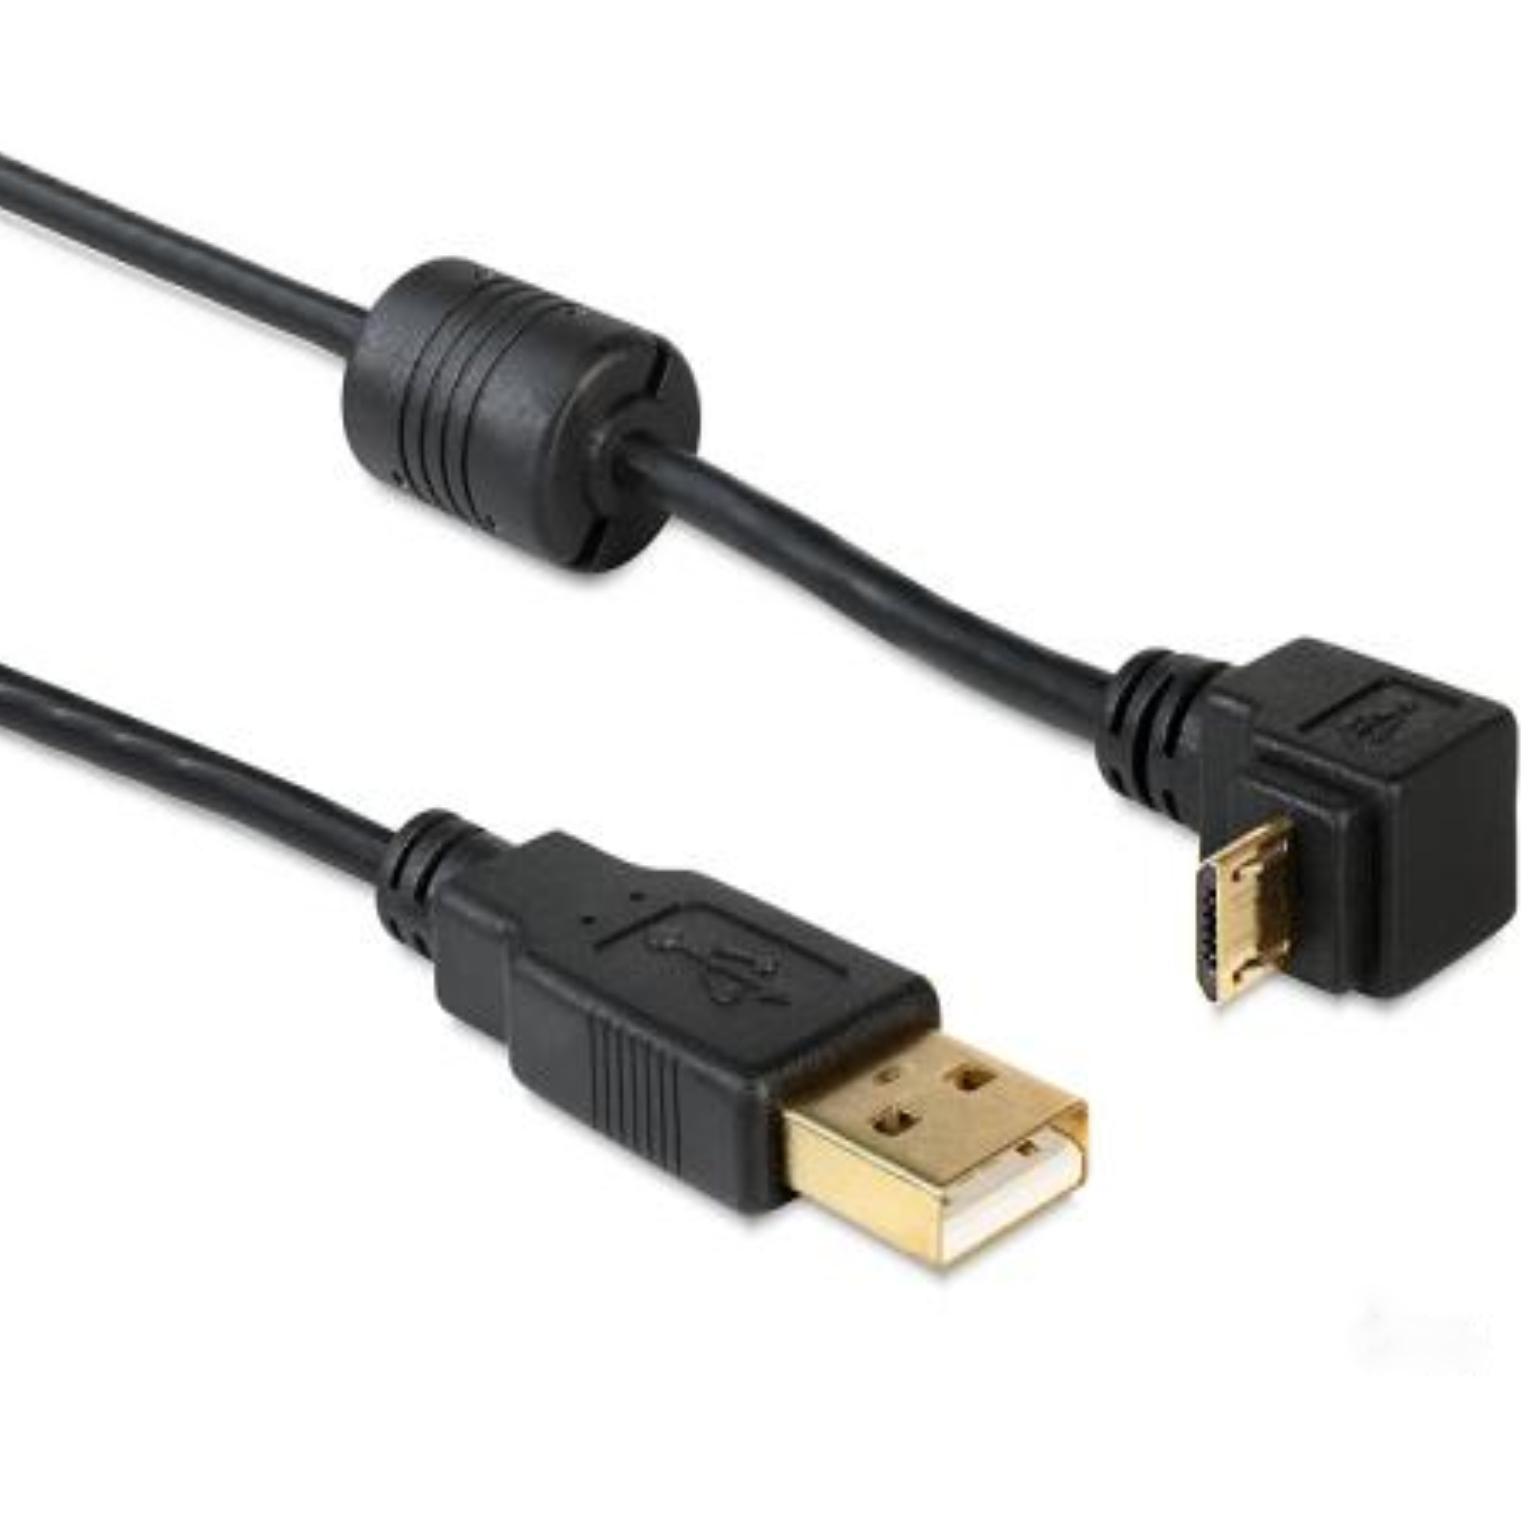 USB Micro B datakabel - 1 meter - Delock